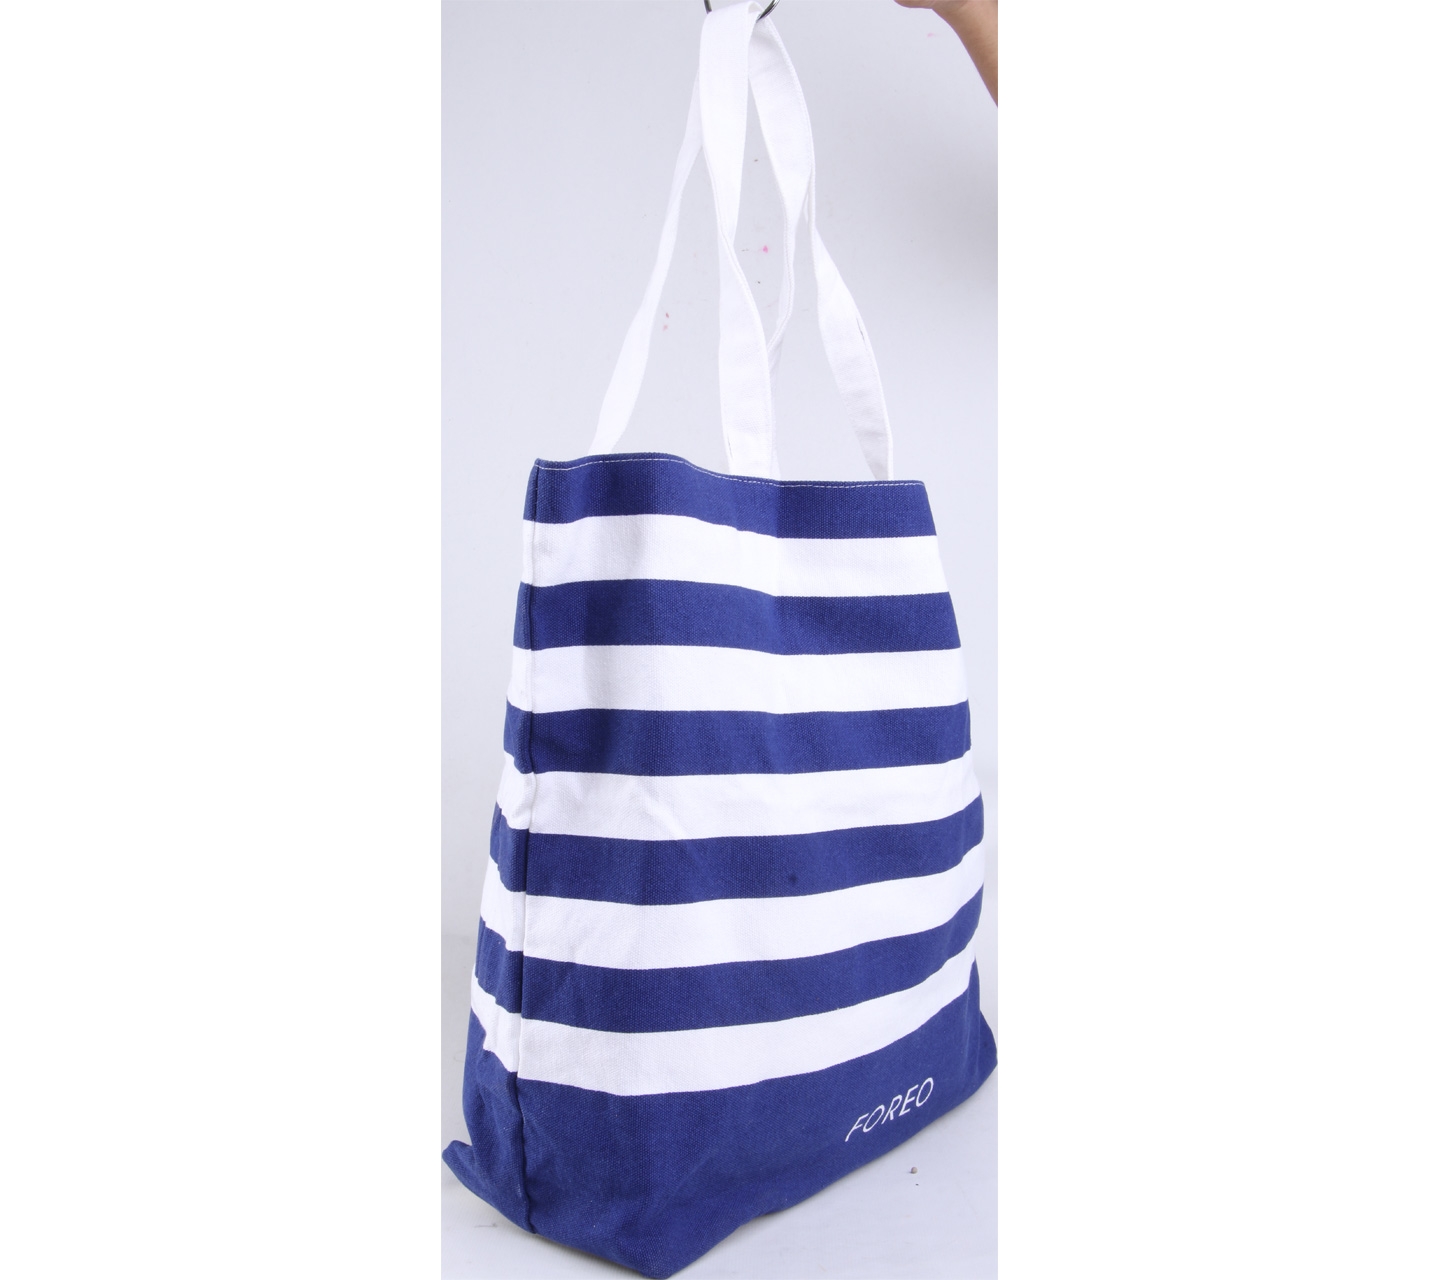 Foreo Navy & White Striped Tote Bag